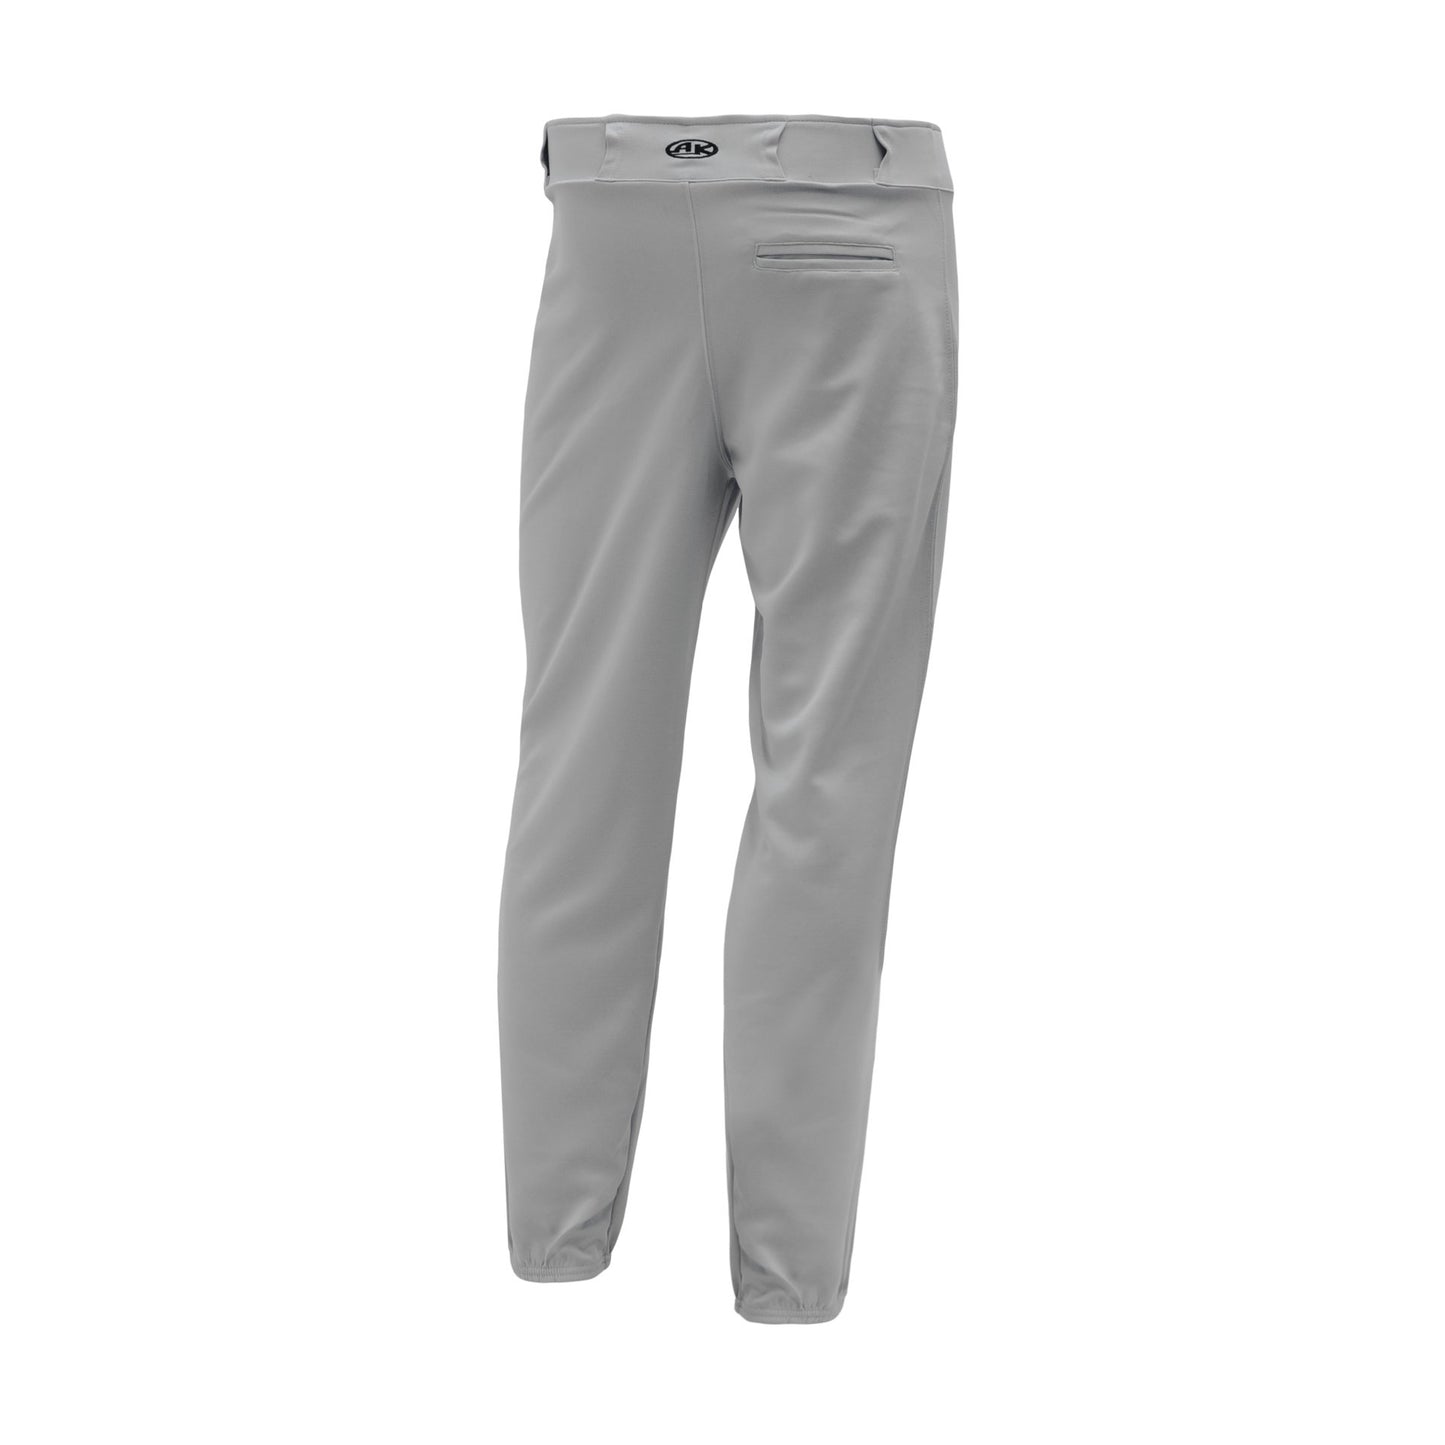 Premium Baseball Pants, Elastic Bottom, Grey, ba1380-012, back